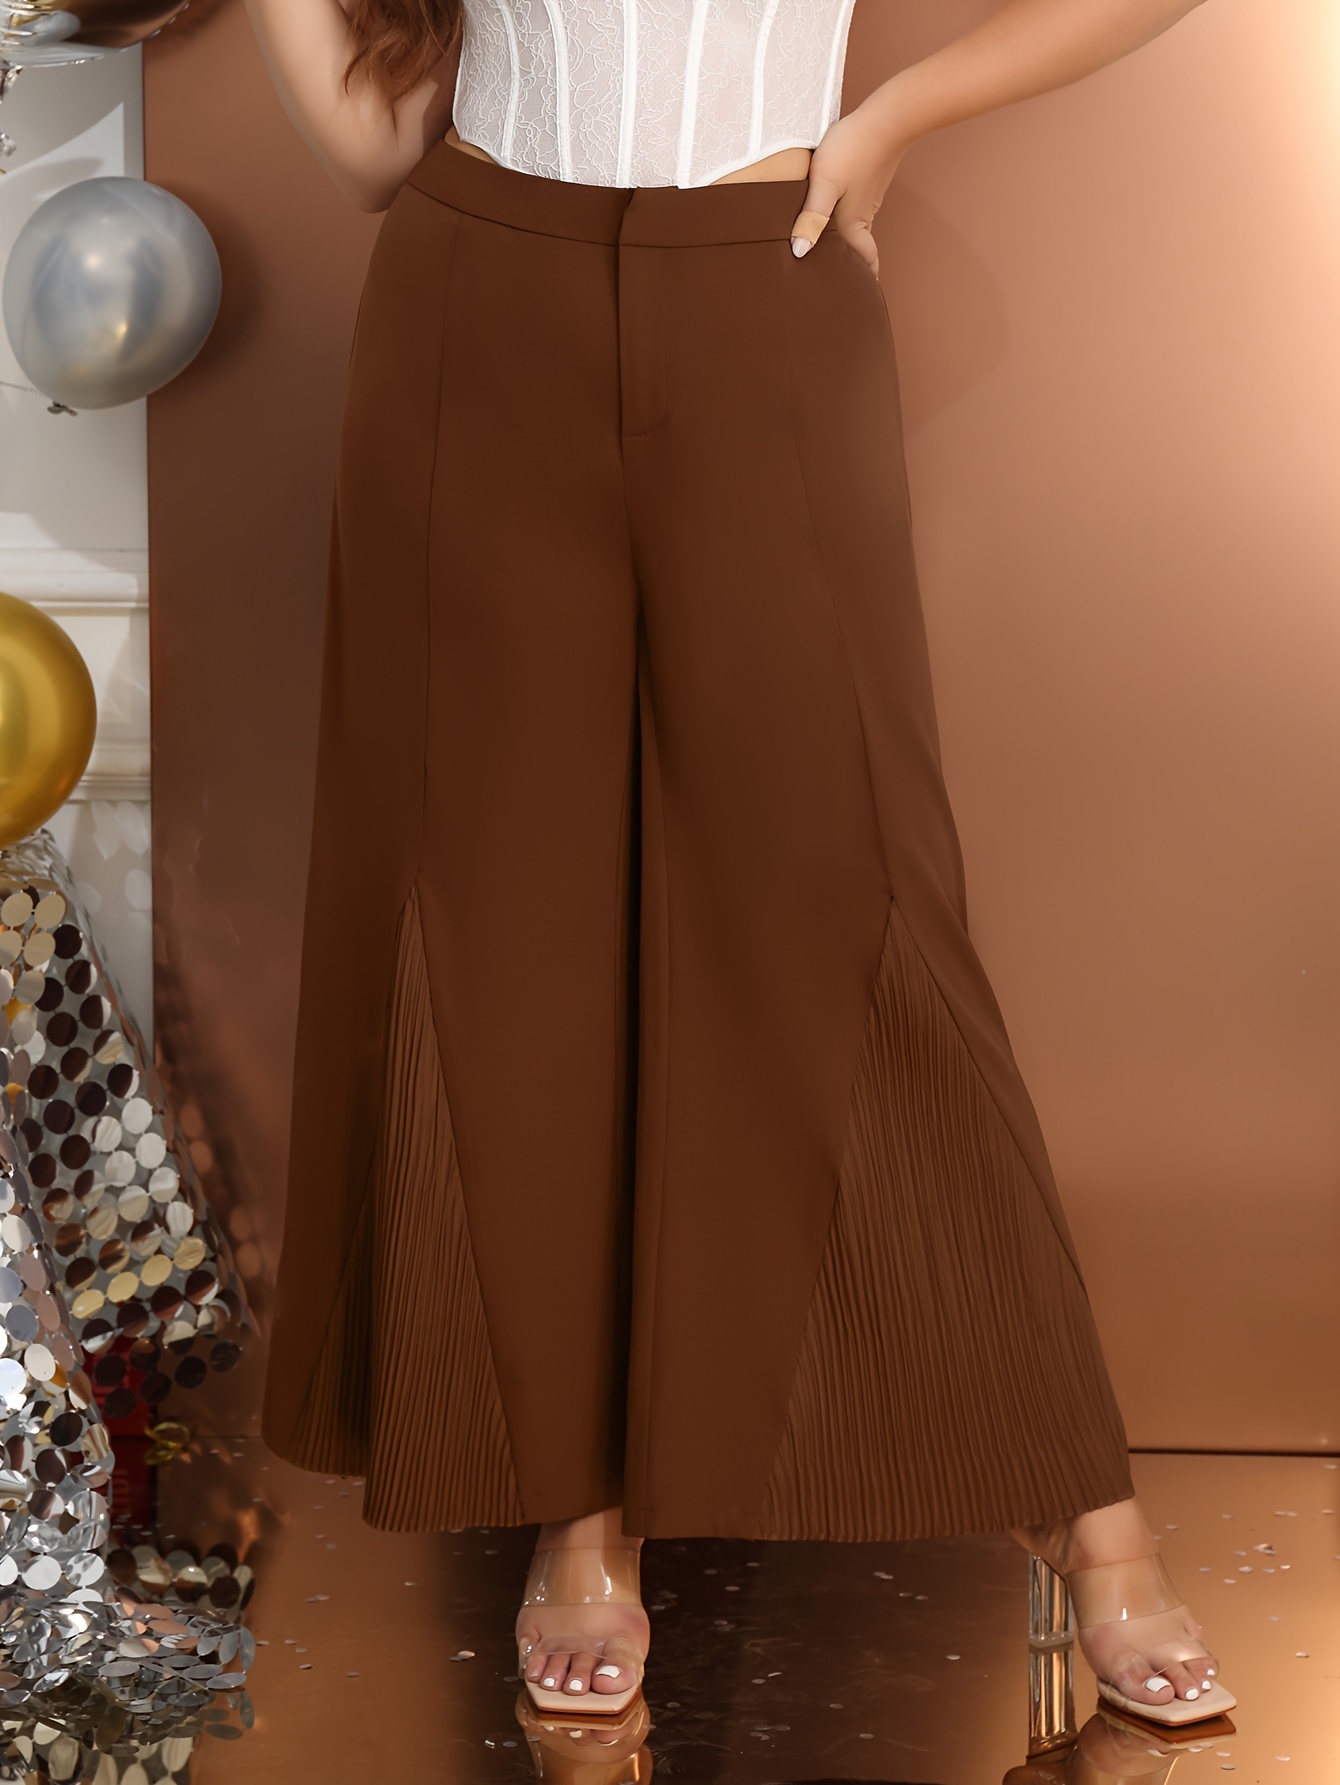 Casual Solid Skinny Mocha Brown Plus Size Pants (Women's) 